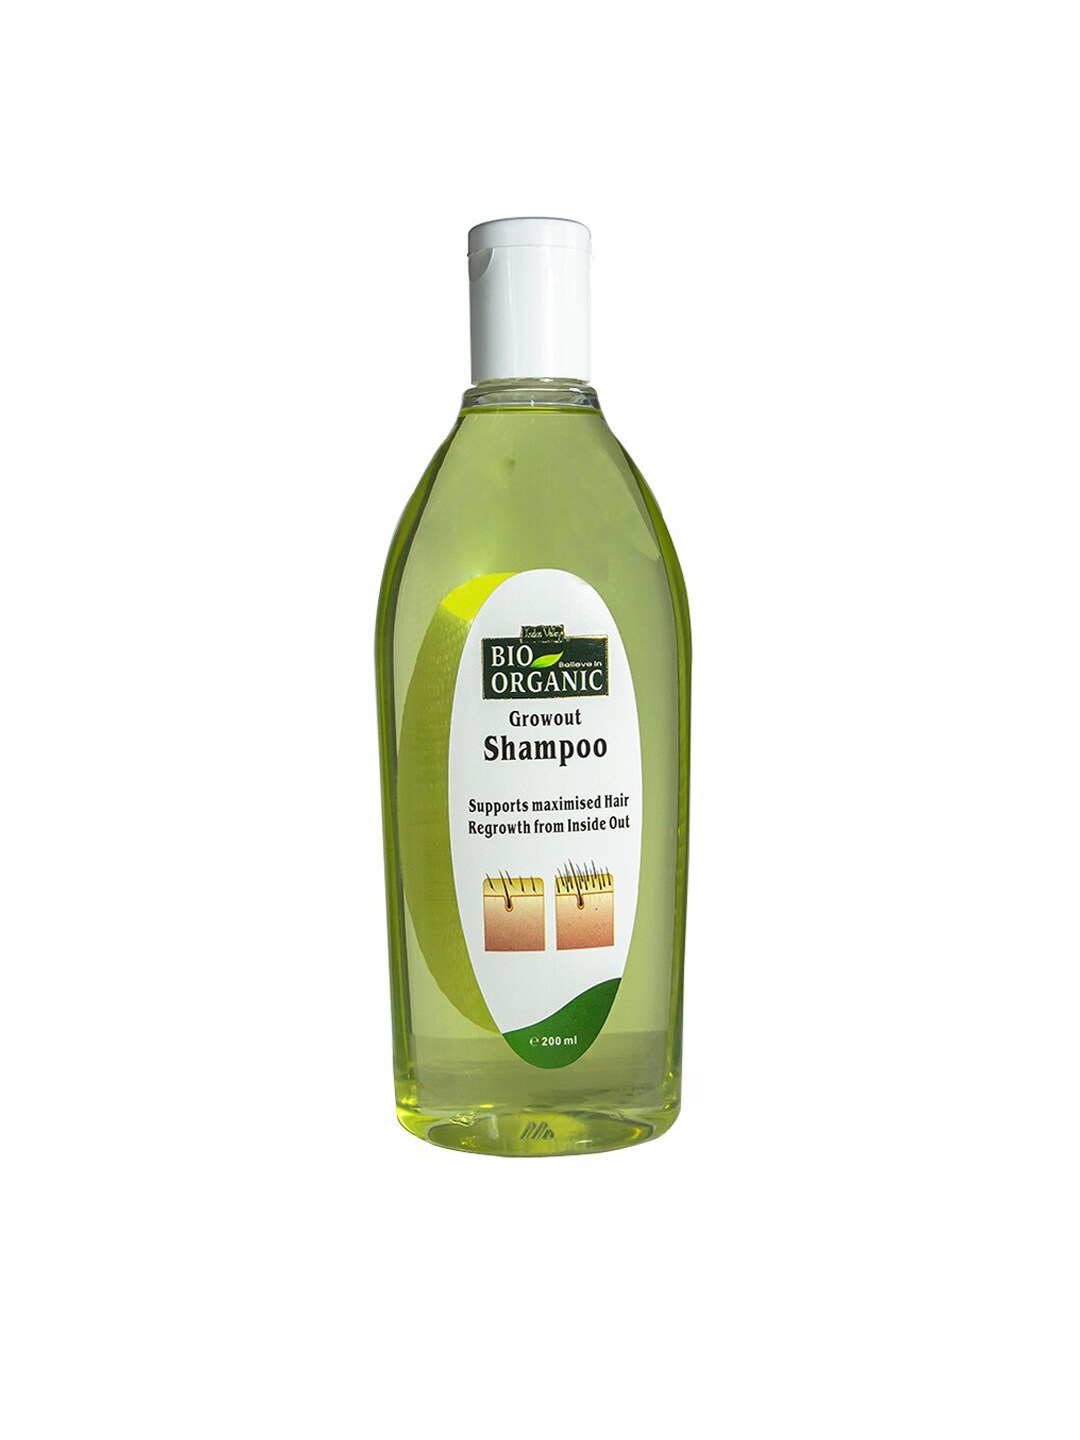 Indus Valley Unisex Bio Organic Growout Shampoo - 200 ml Price in India